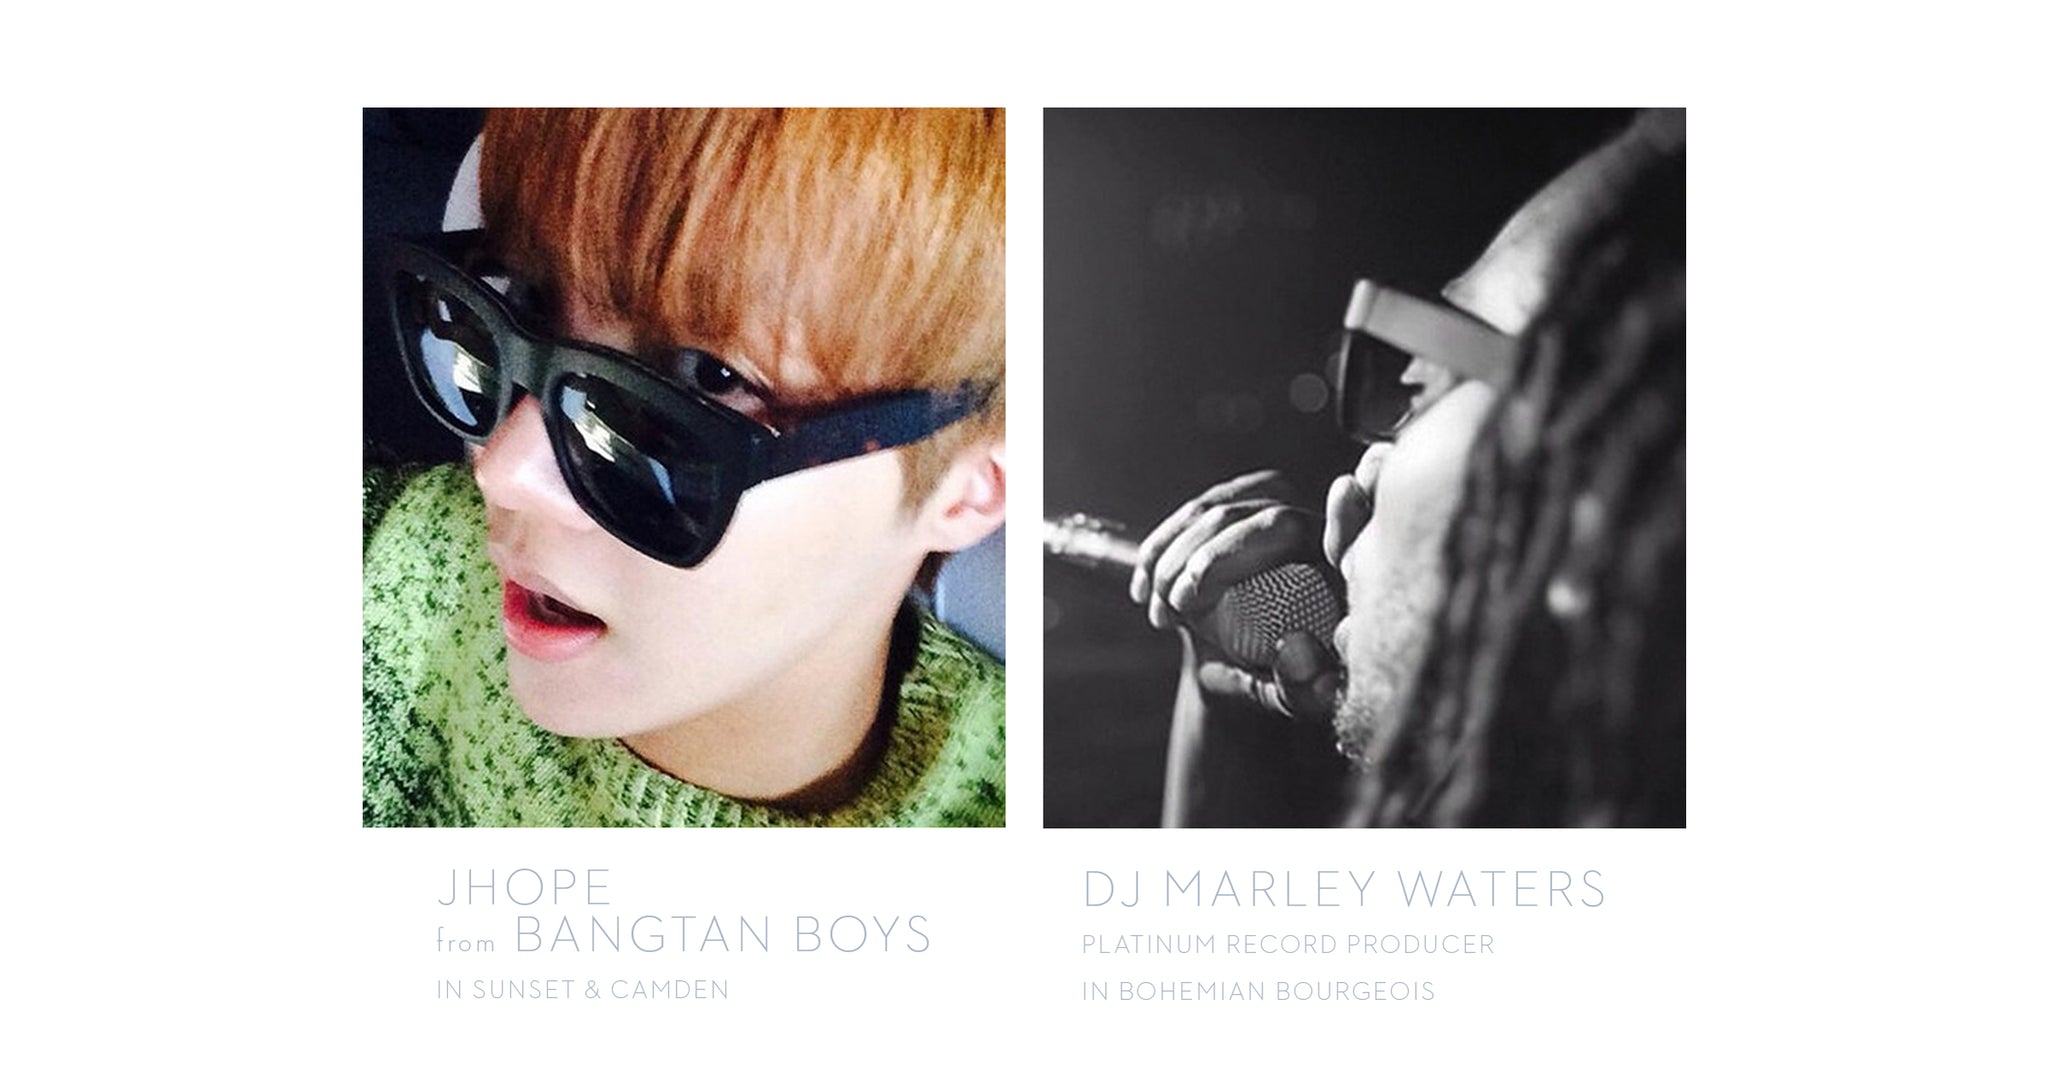 JHope from the Bangtan Boys wearing Sunset & Camden Sunglasses by Tyche & Iset Designer Eyewear